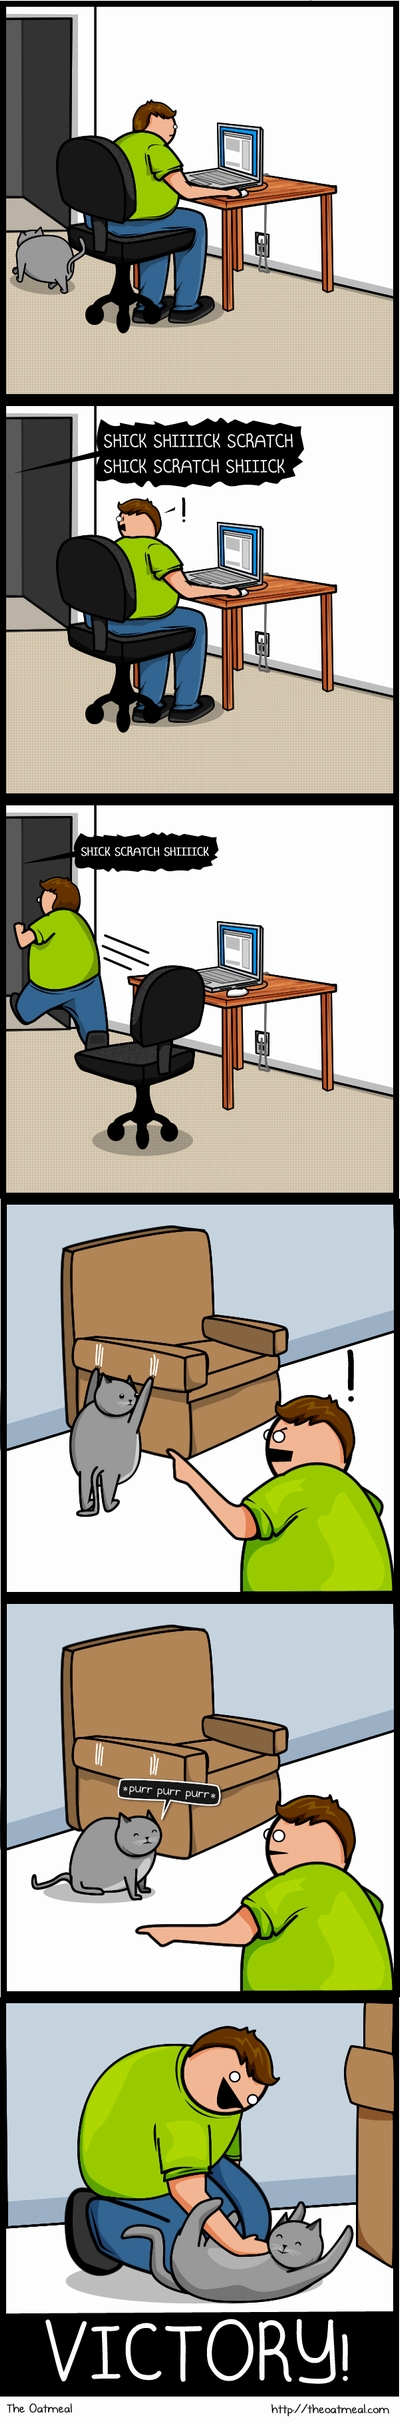 cat_vs_internet_03.jpg